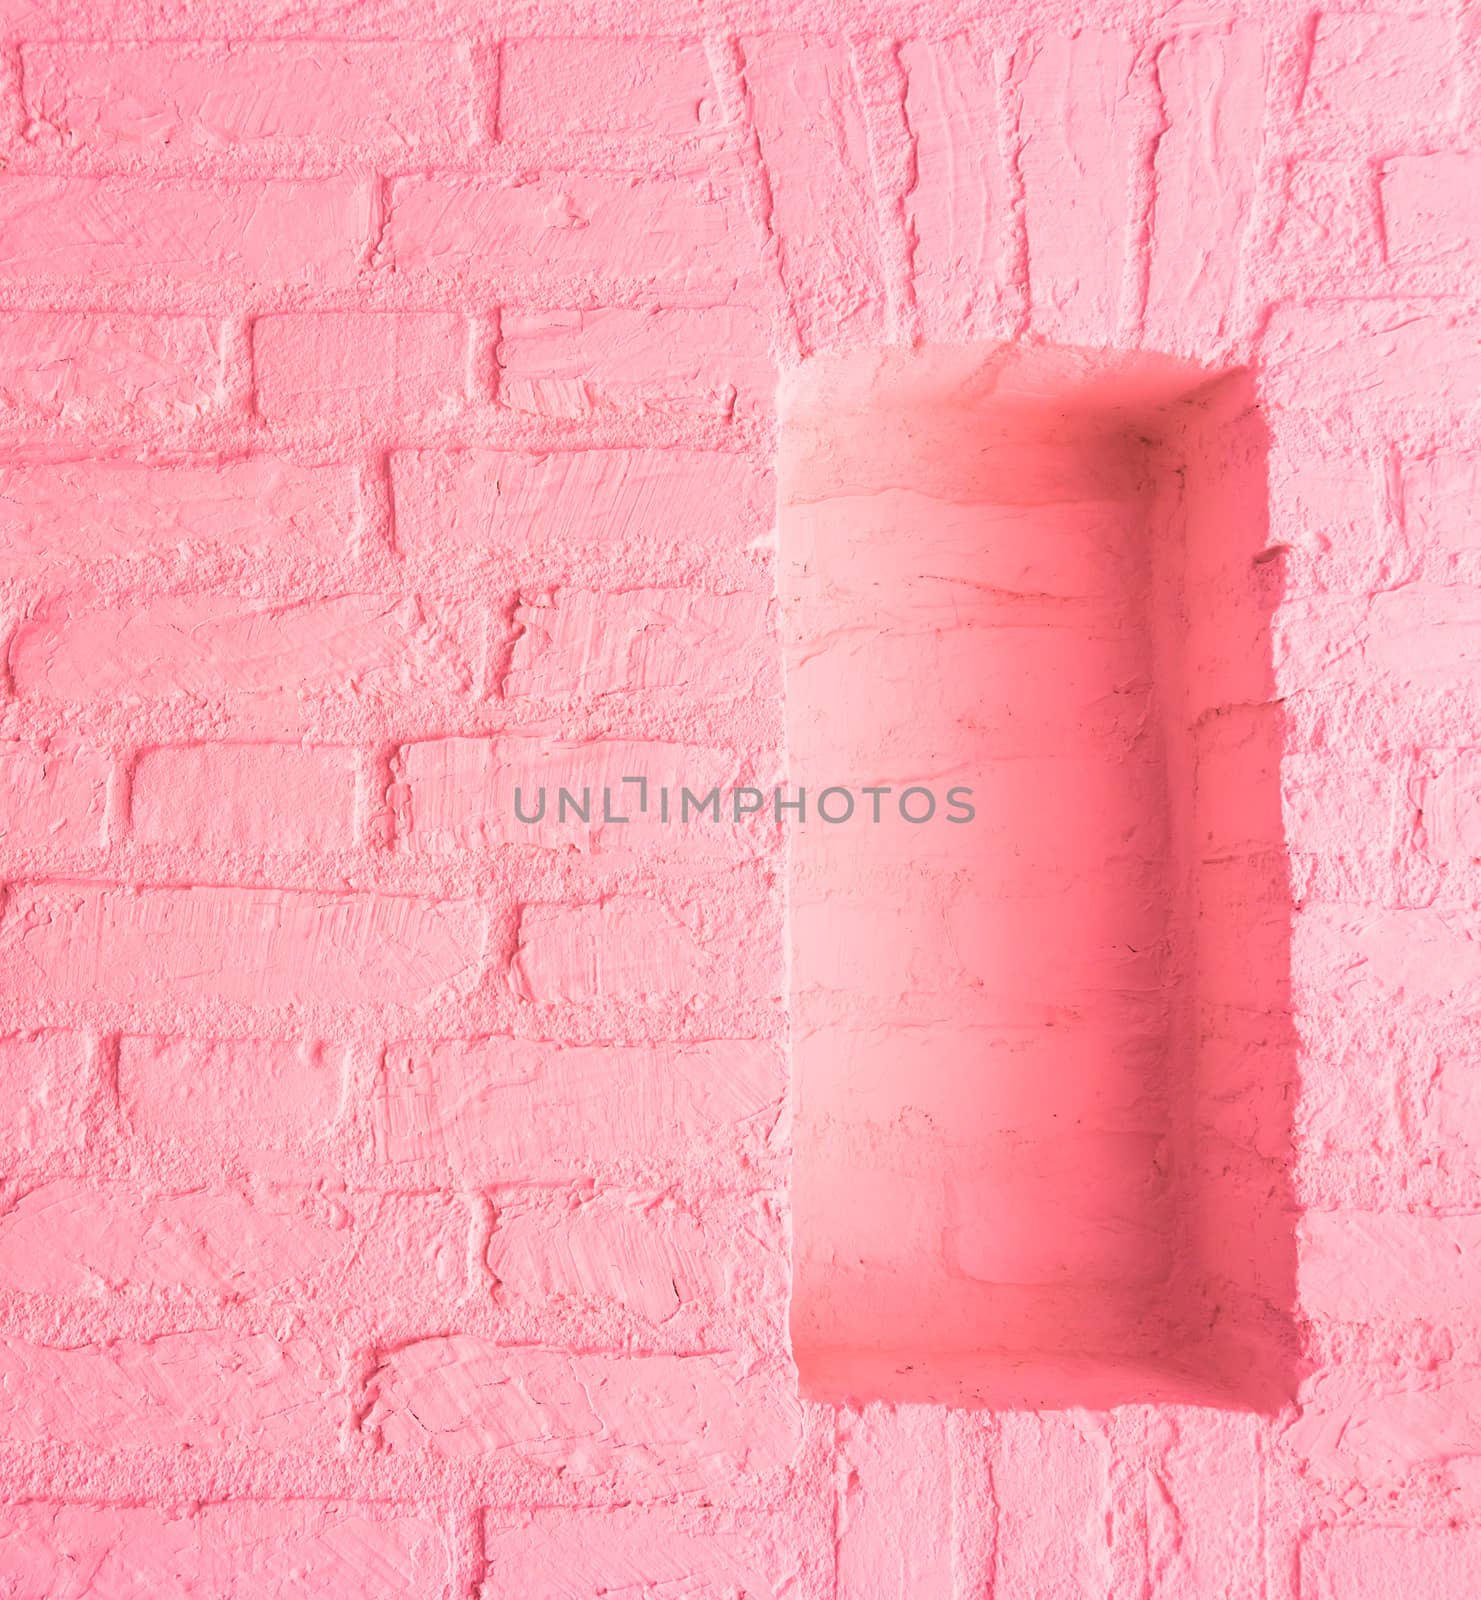 Modern vintage soft light pink stone brick wall background with empty window space by charlottebleijenberg